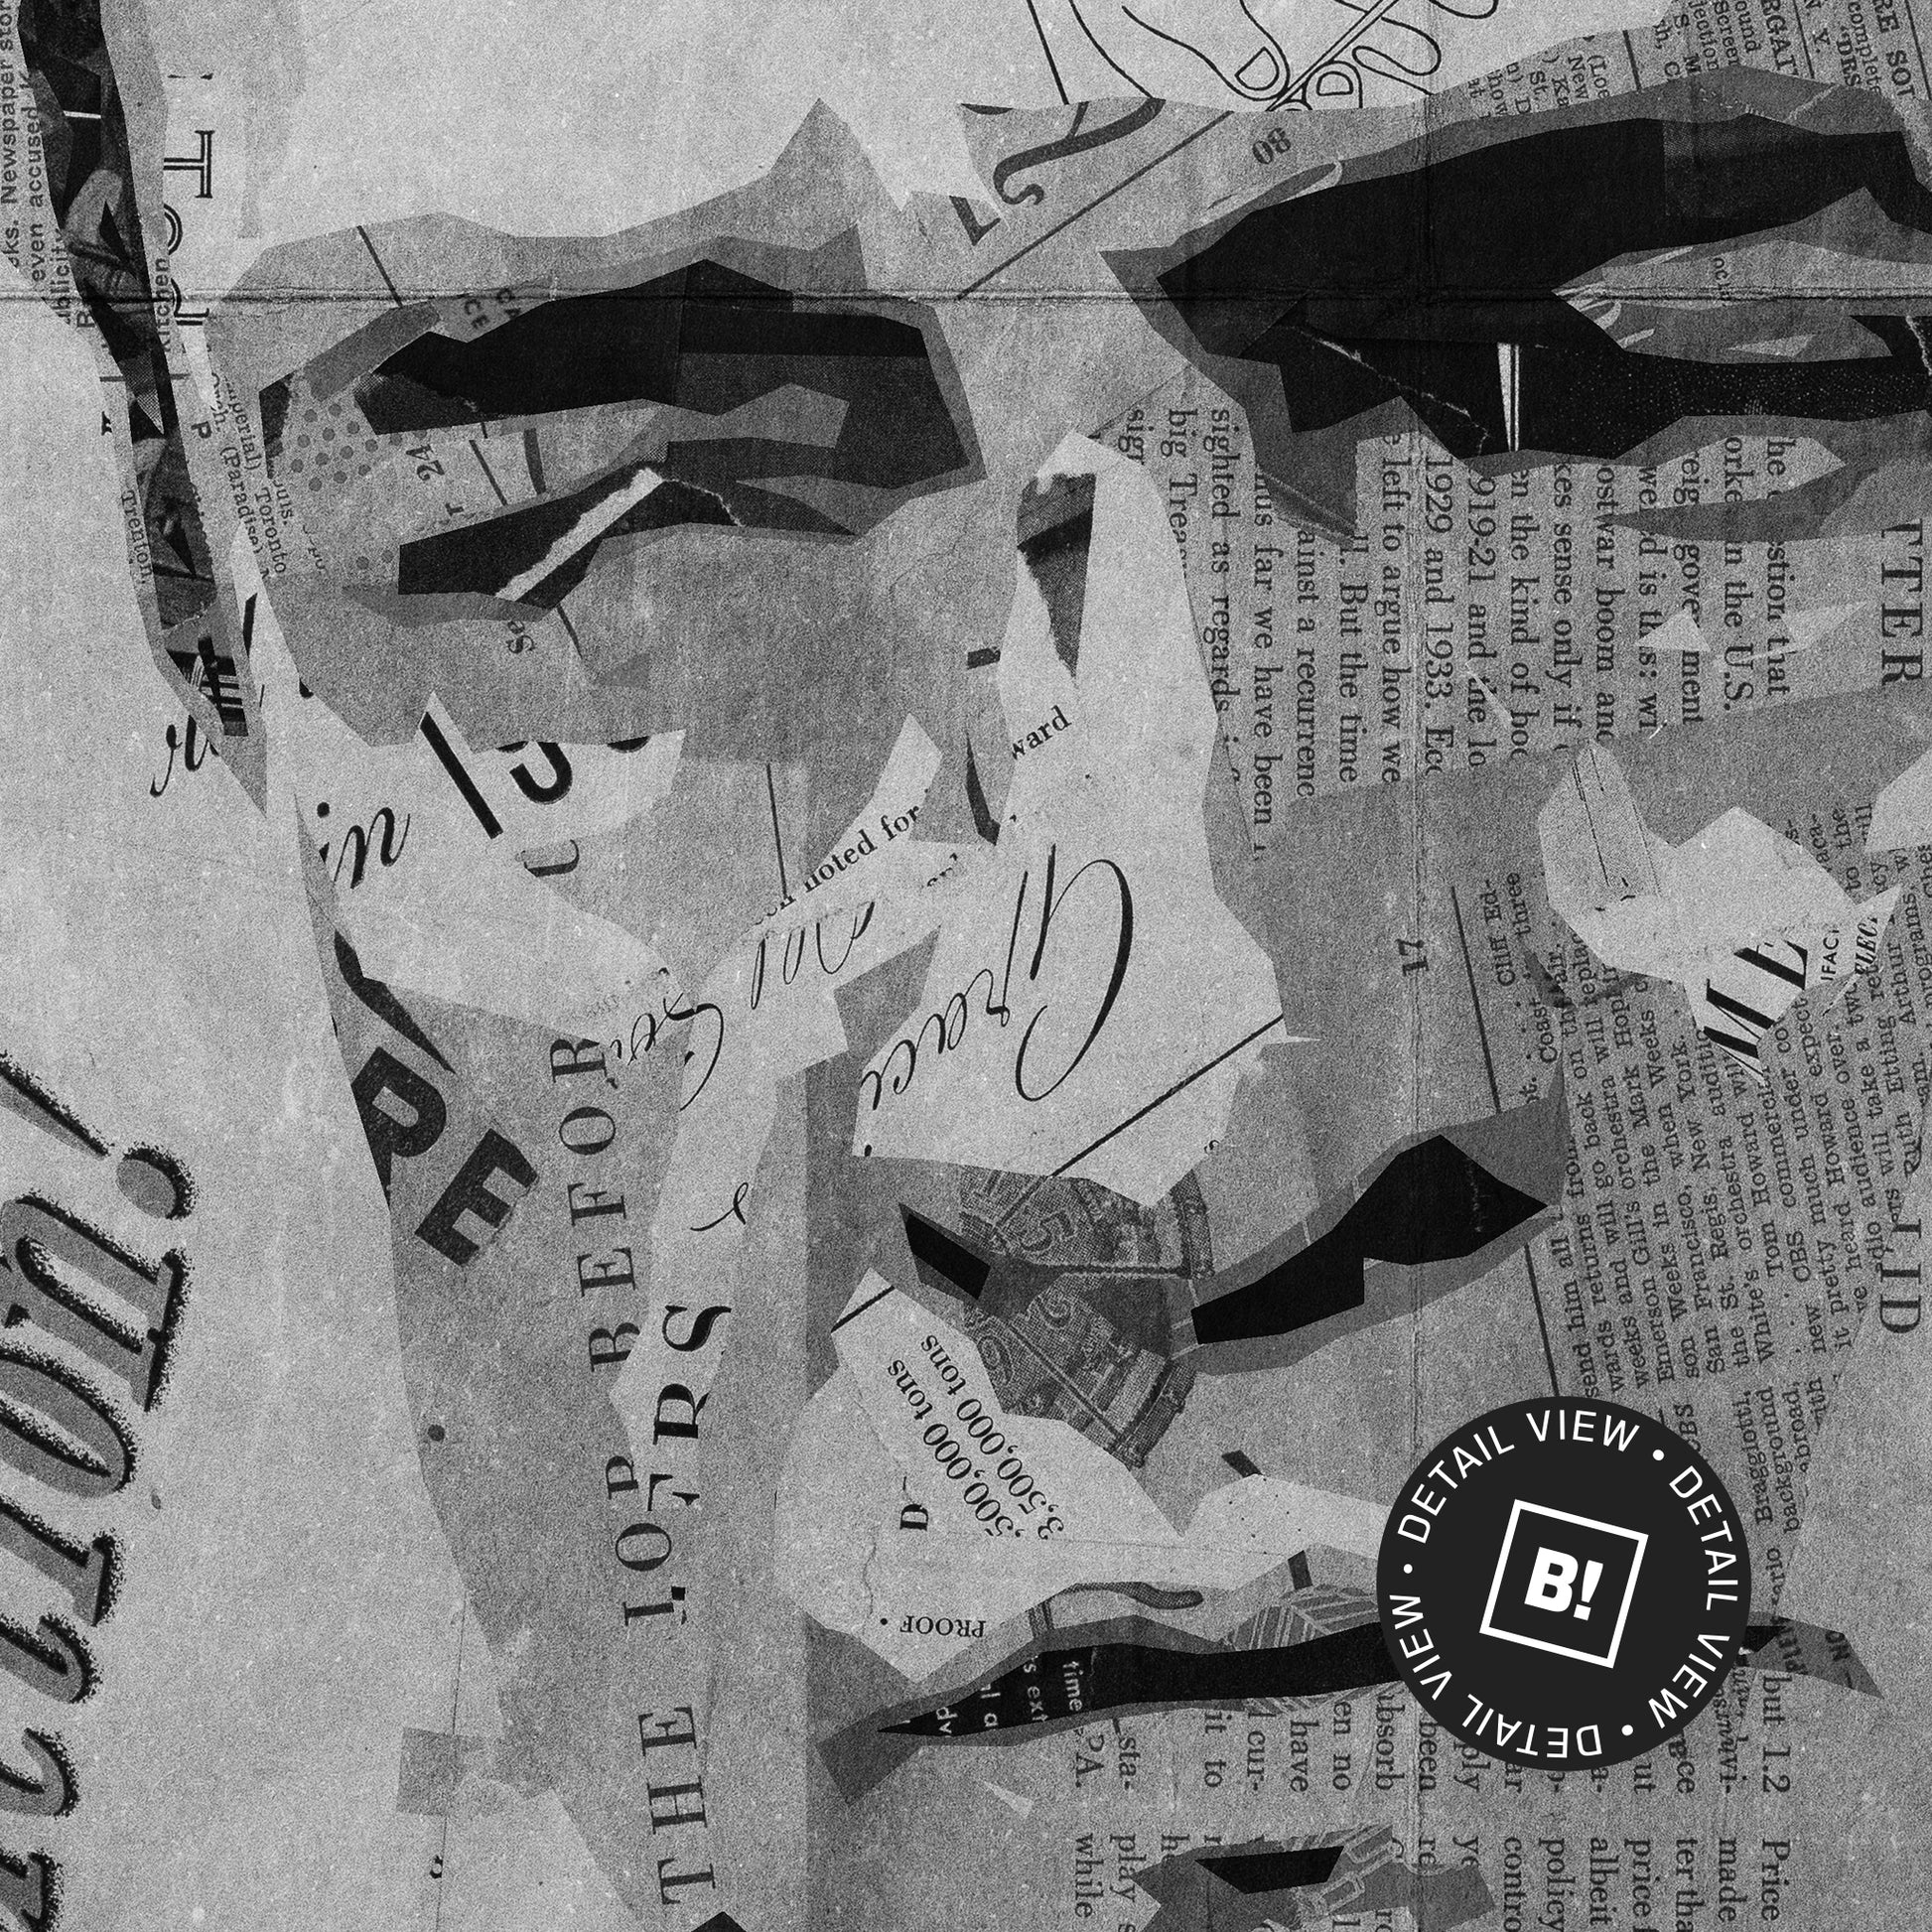 A Detail view of Binspired's Iconic Johnny Cash Paris Centre Pompidou Exhibition Art Print.